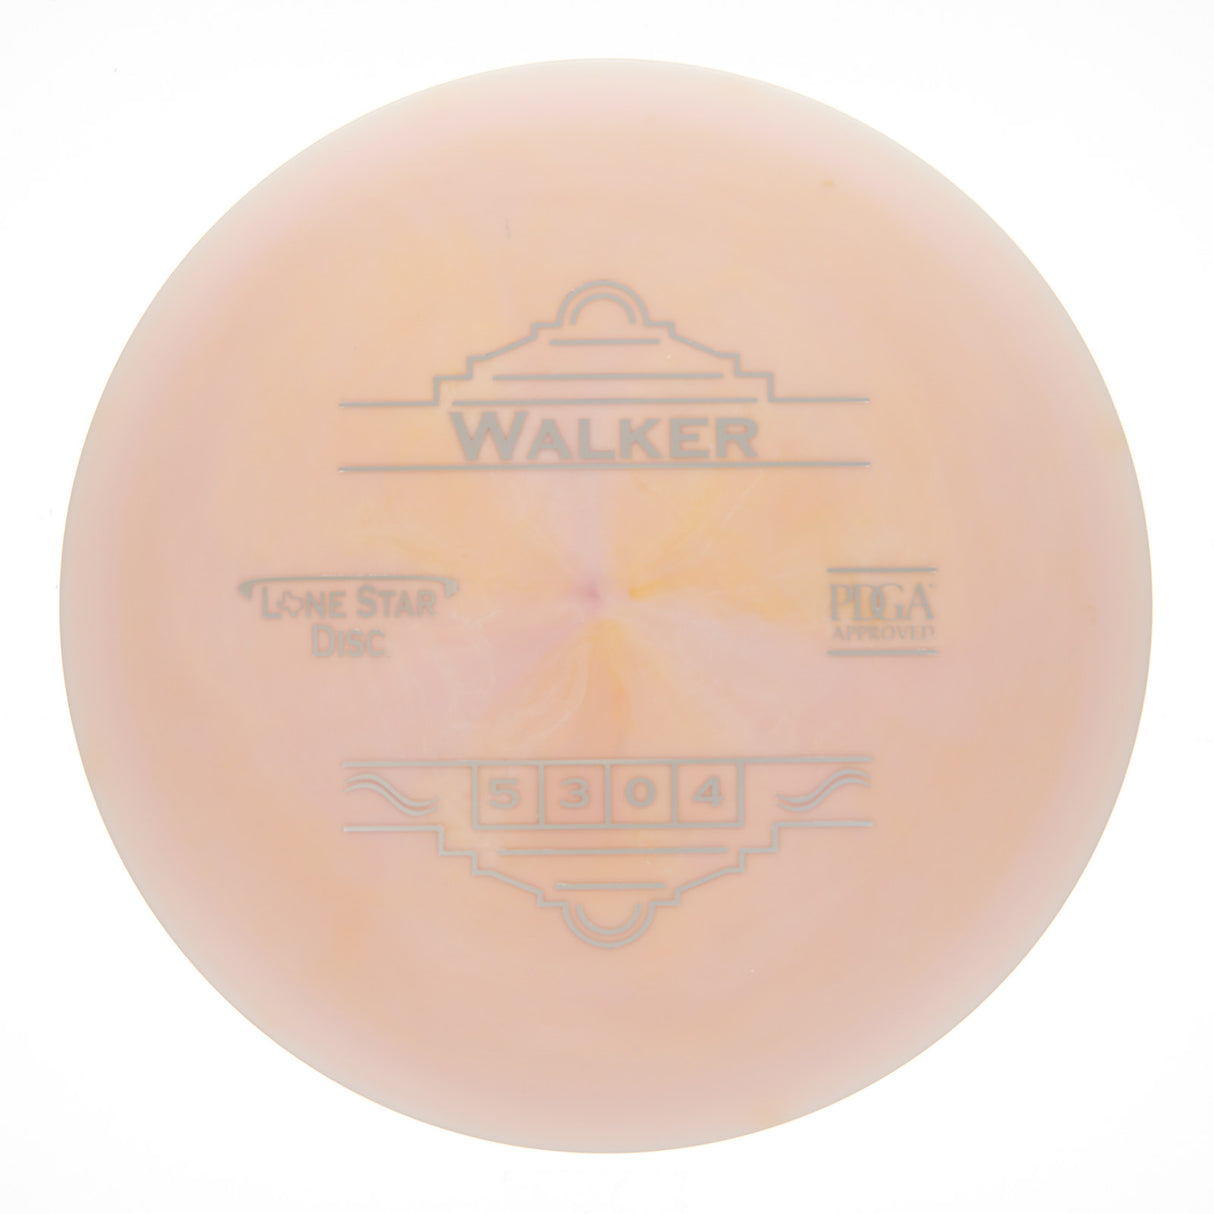 Lone Star Disc Walker - Alpha 169g | Style 0002